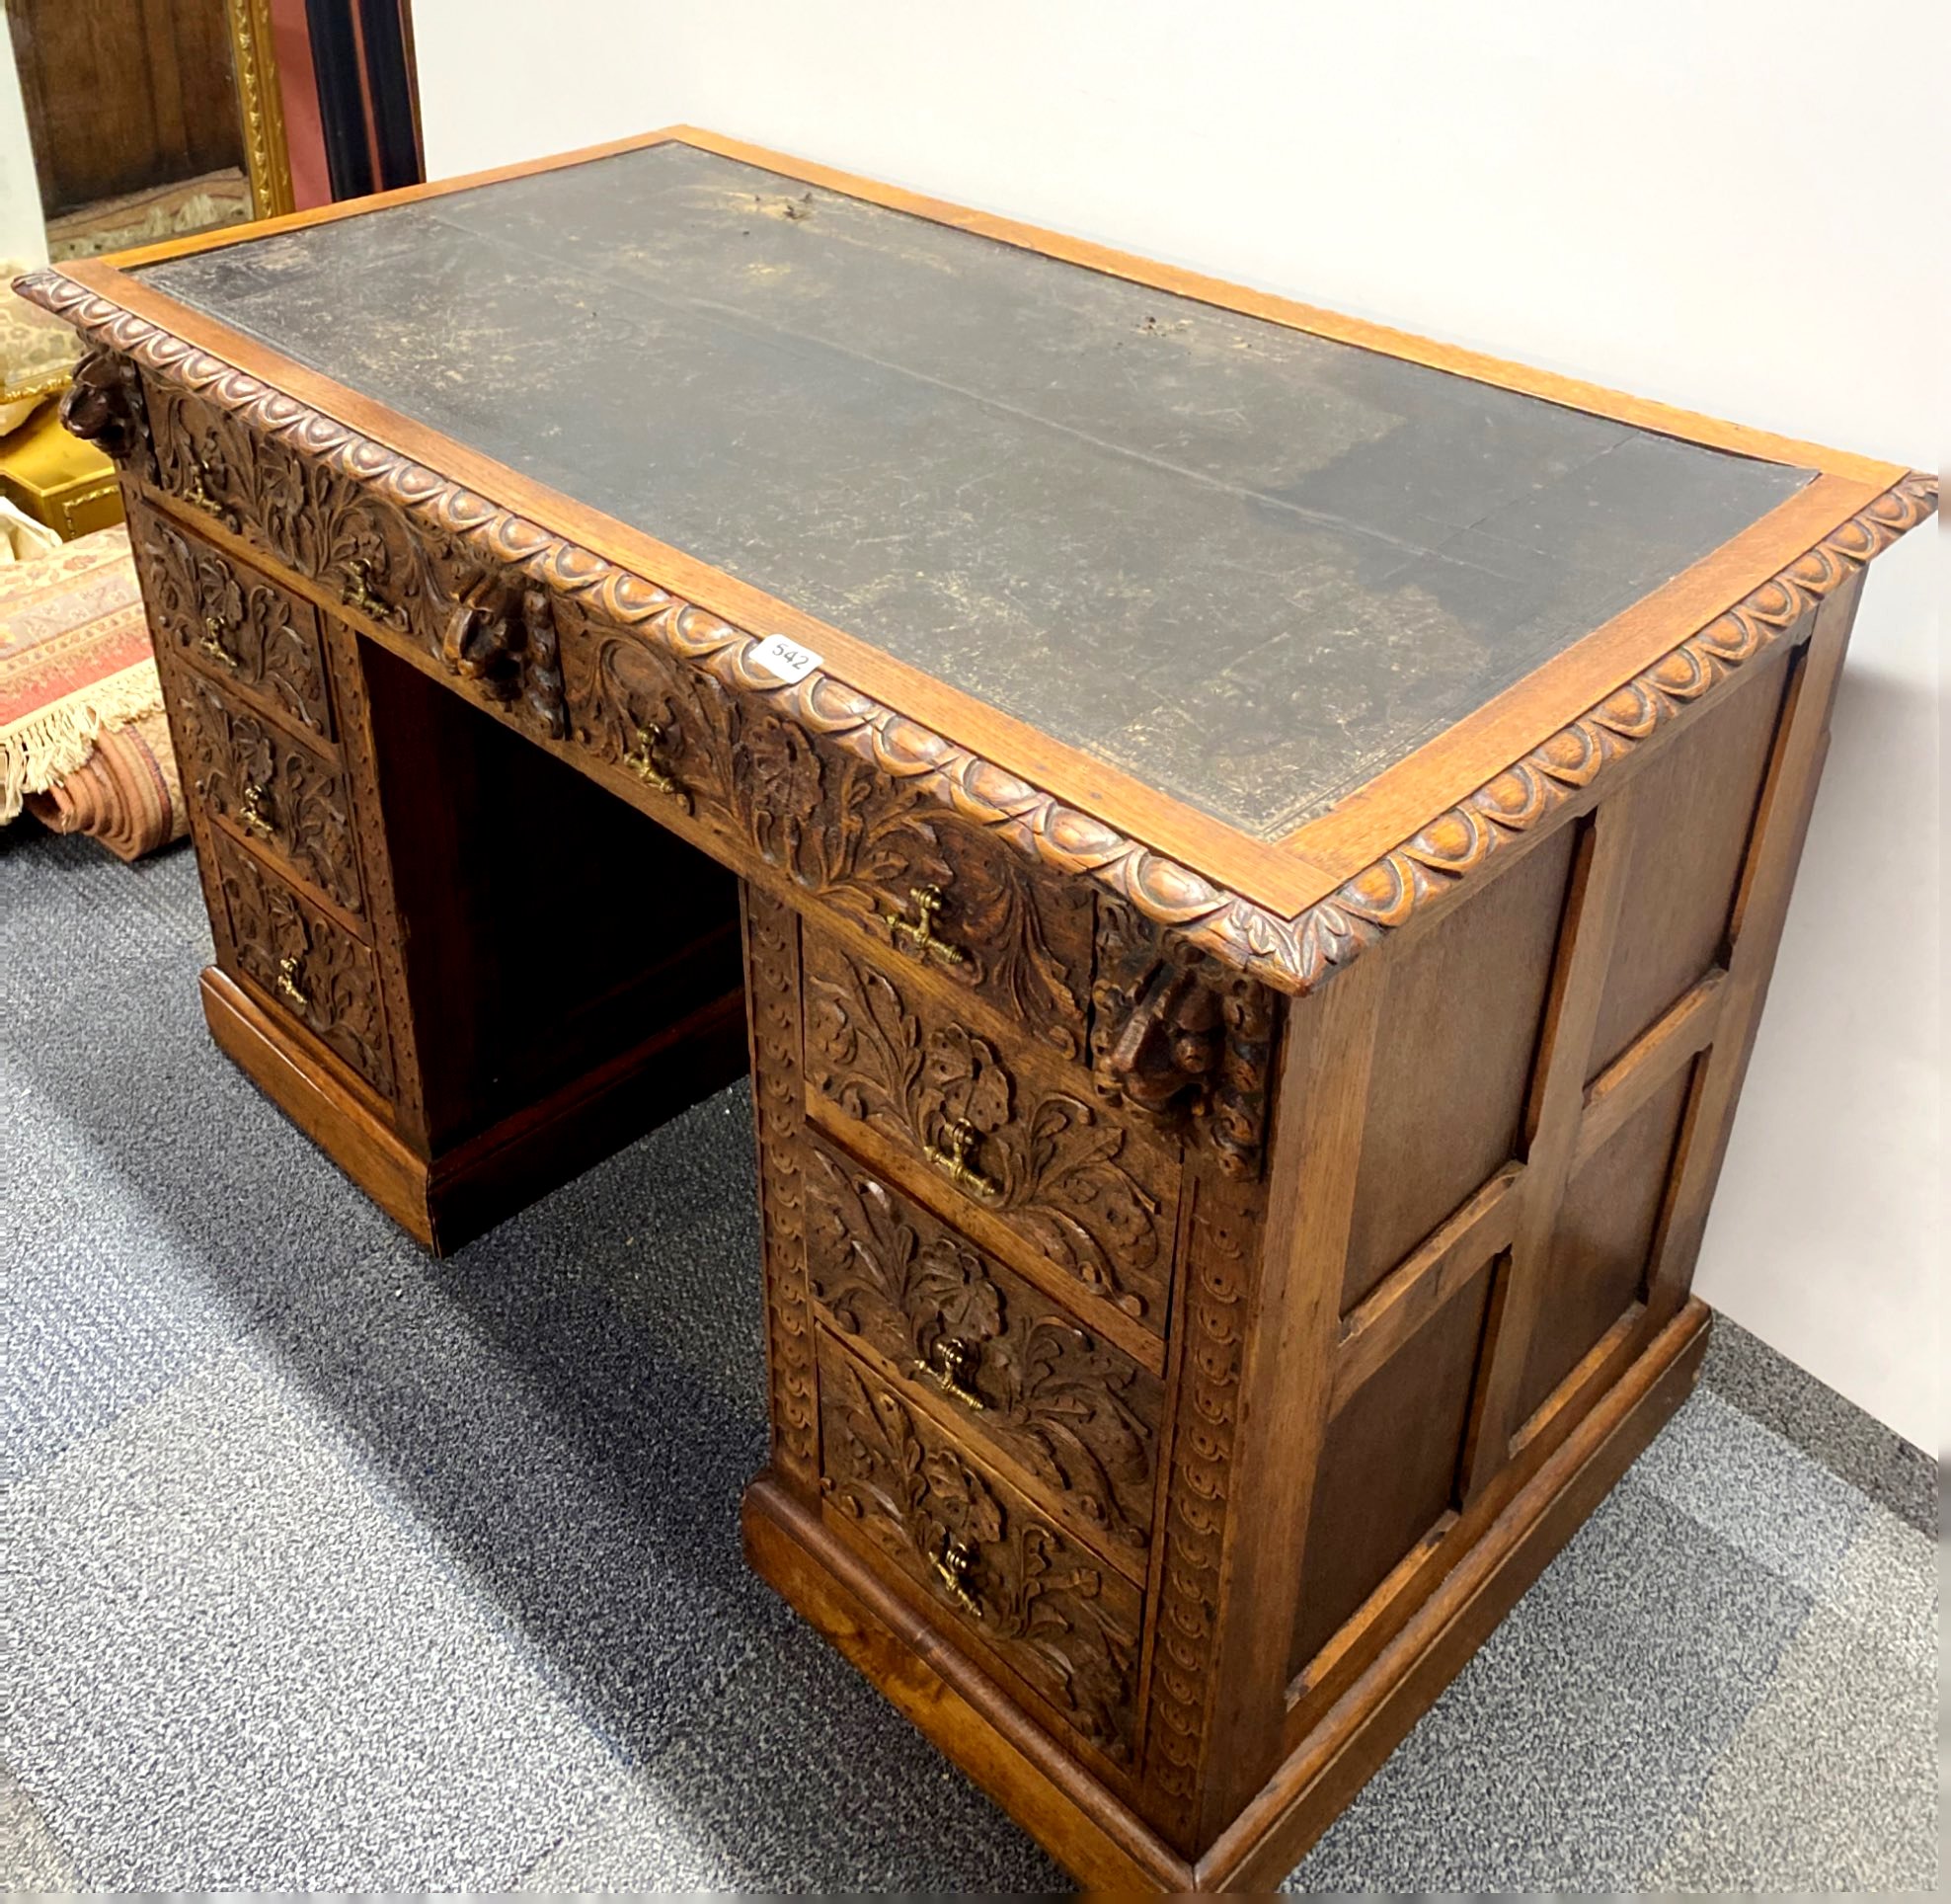 A 19th century carved oak desk, 120 x 65 x 77cm. - Image 4 of 4